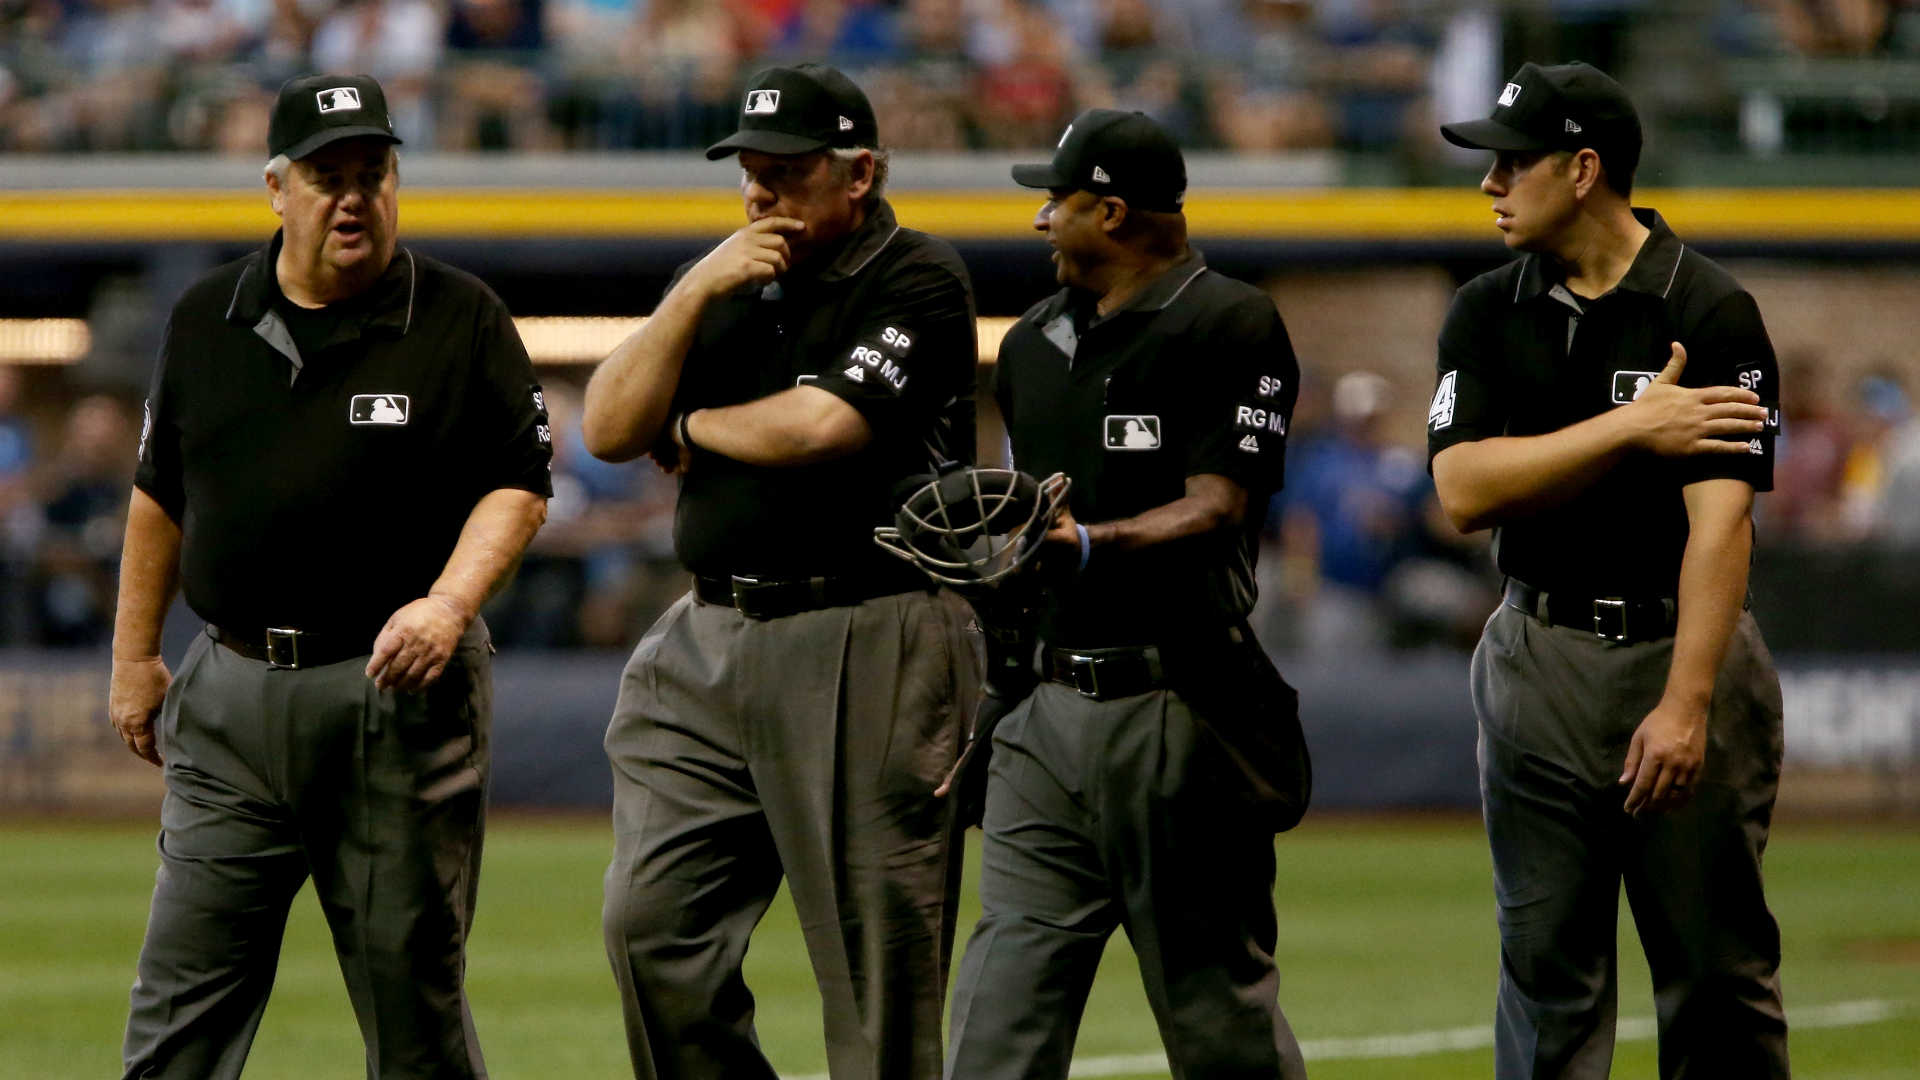 MLB umpires missed 34,294 ballstrike calls in 2018, study shows MLB